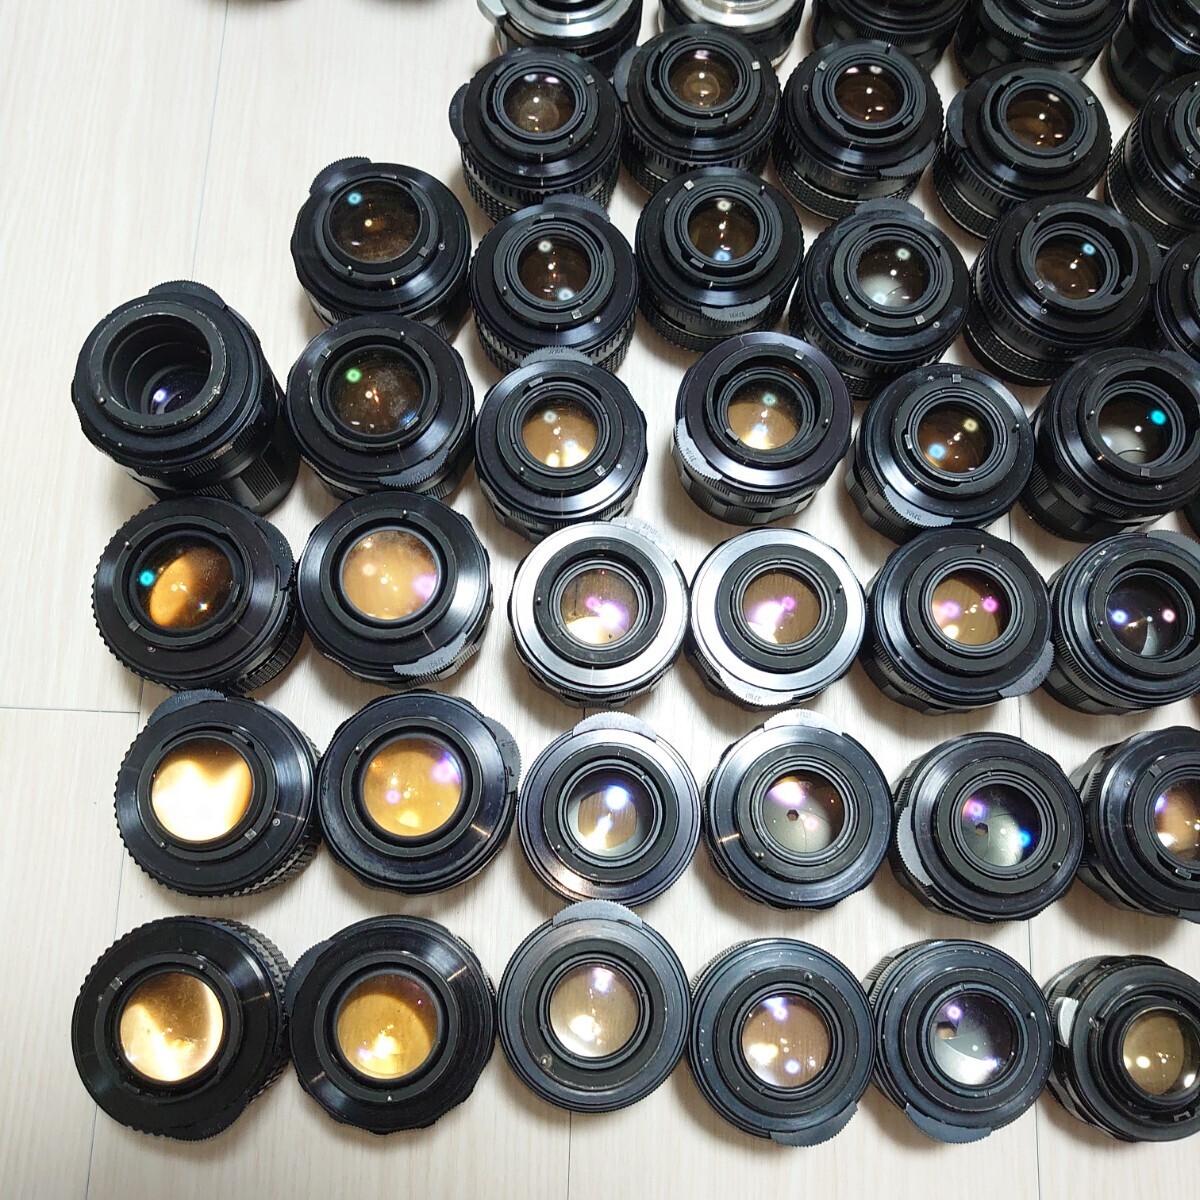 Pentax super takumar スーパータクマー 75本 単焦点レンズ 標準レンズ 望遠レンズ 1円スタート 引越しのためカメラ用品色々出品中の画像6